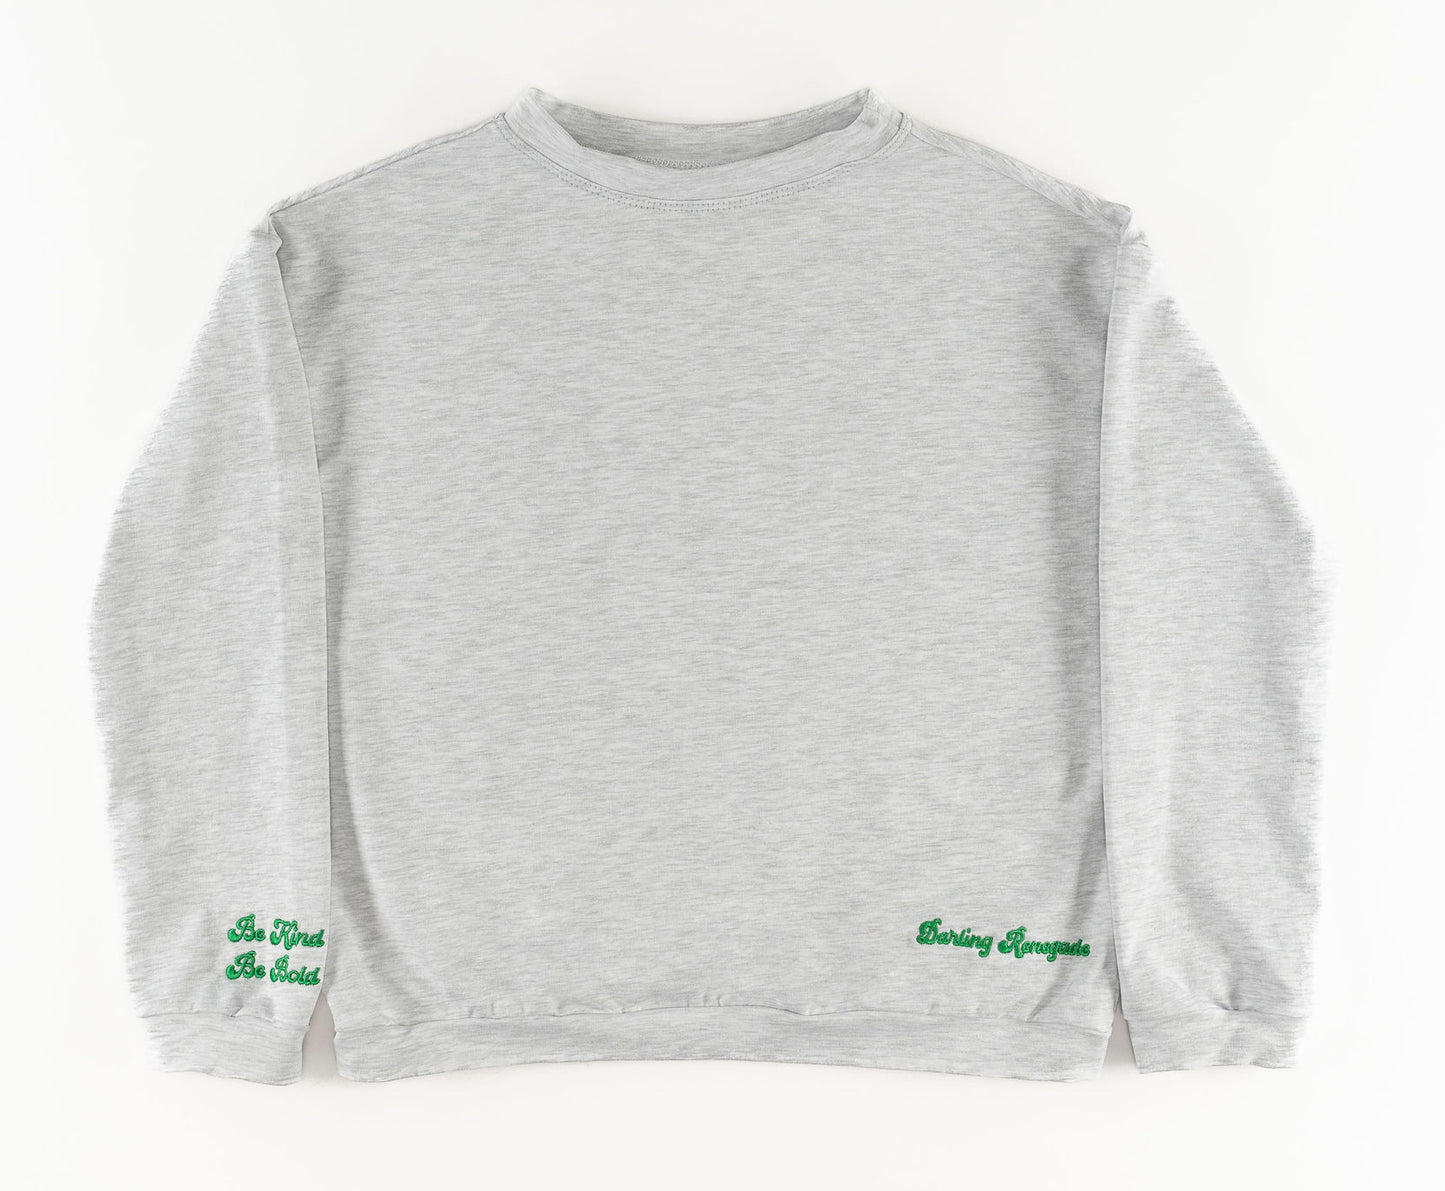 Signature Crewneck Sweatshirt in Gray/Green